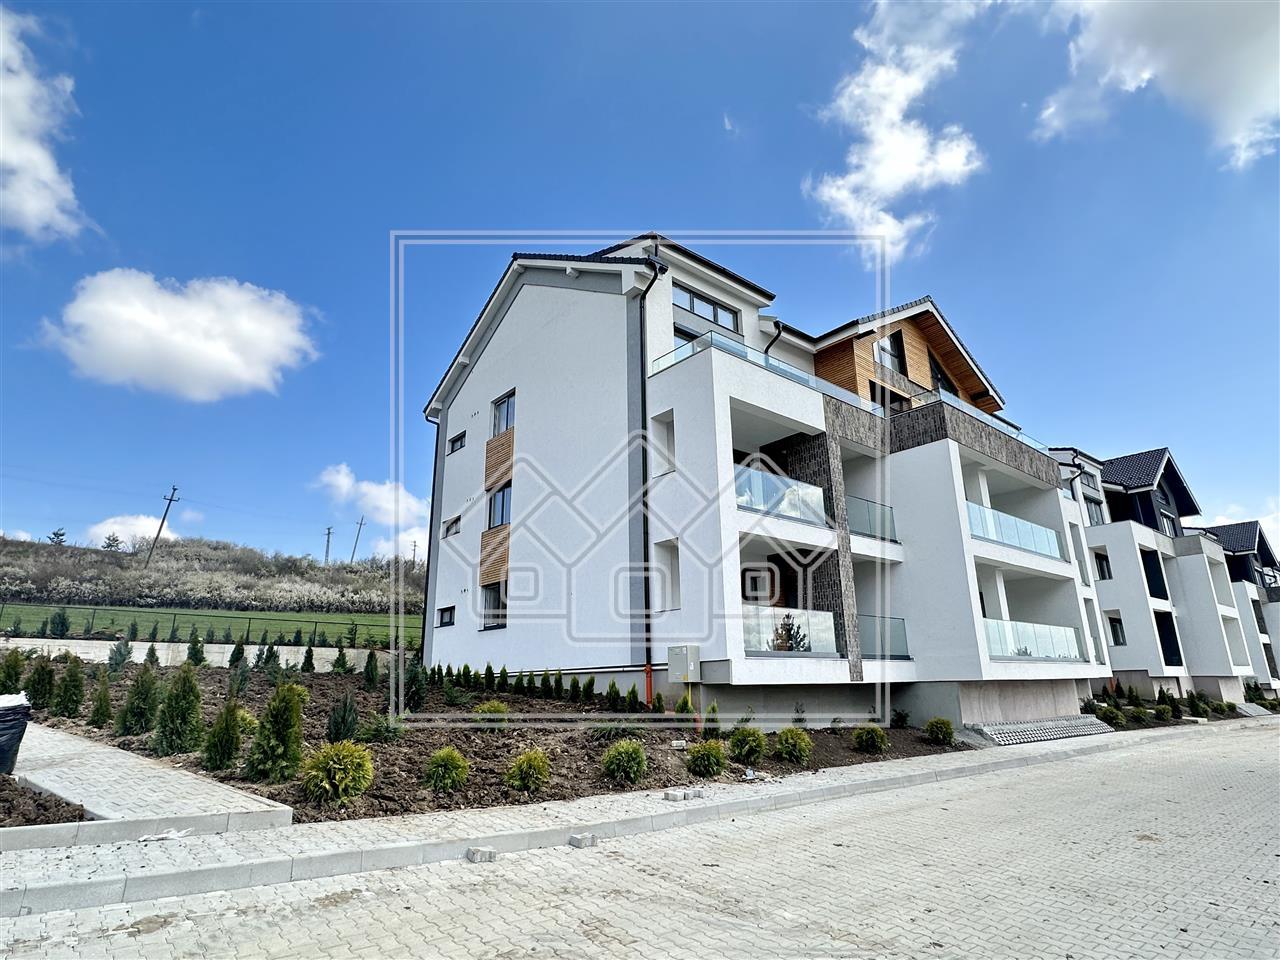 2-room apartment for sale in Sibiu - Cristian - S.utila 53.45 sqm